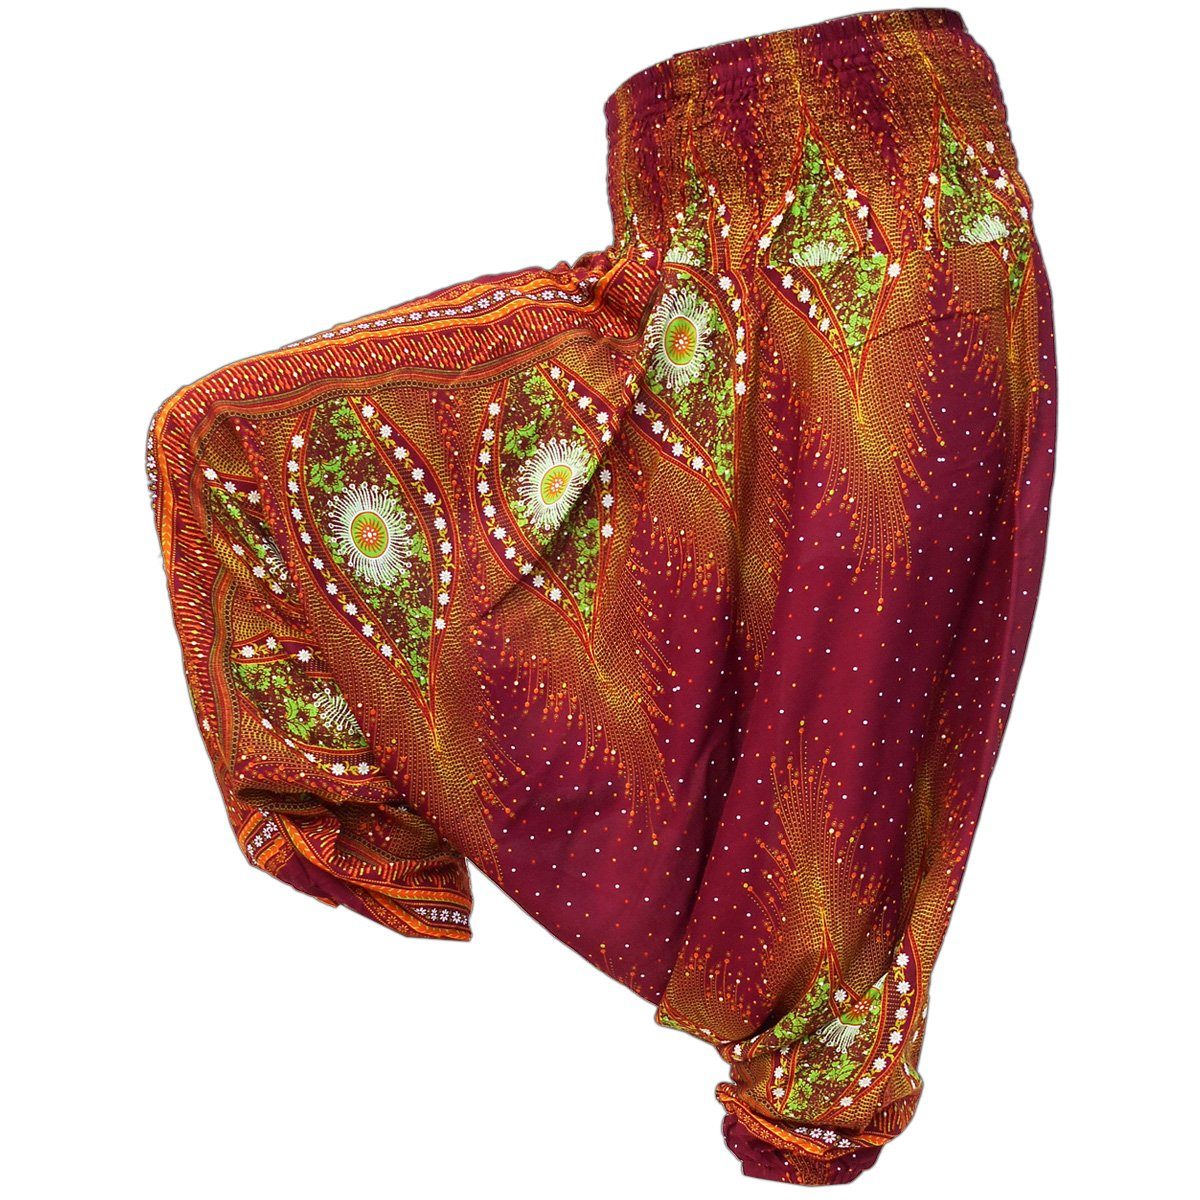 PANASIAM Stoffhose Aladinhose im schönen Peacock Design Haremshose aus 100% natürlicher Viskose auch als Overall tragbar Damen Pumphose bequeme Freizeithose V 16